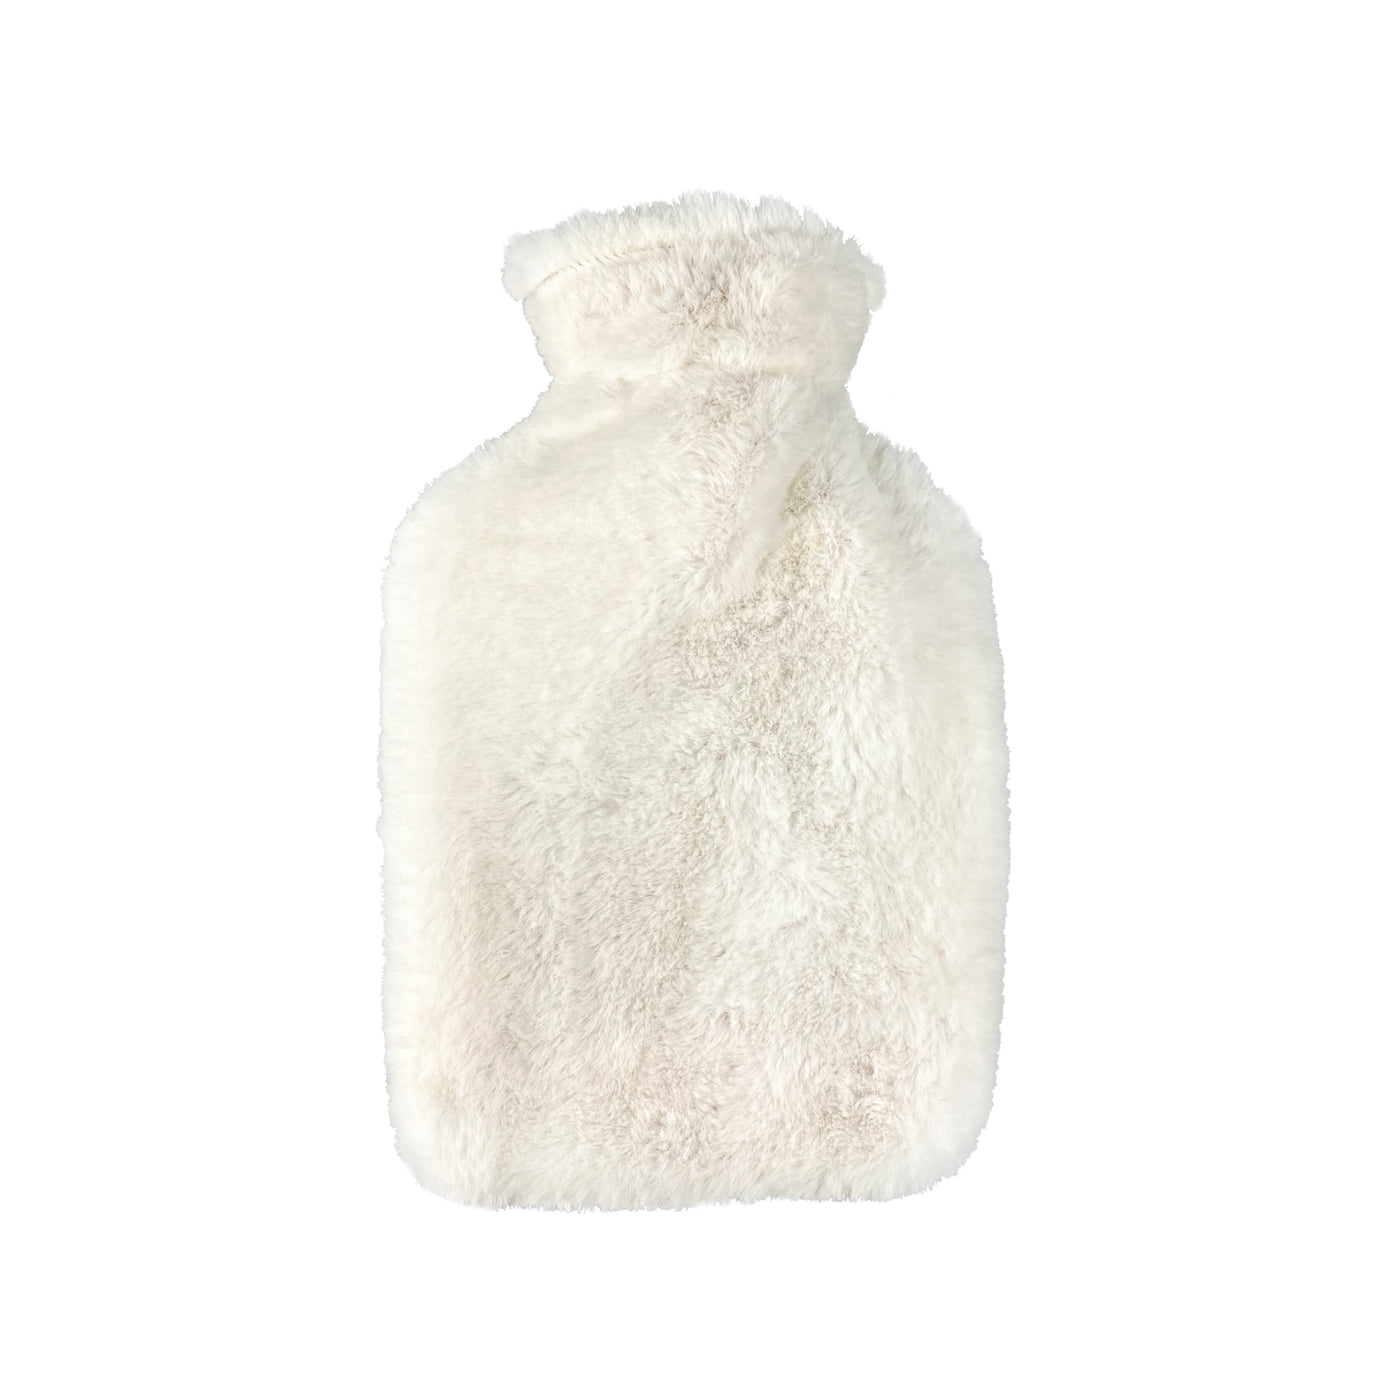 Hot Water Bottle 700mL & Cover - Winter White Faux Fur